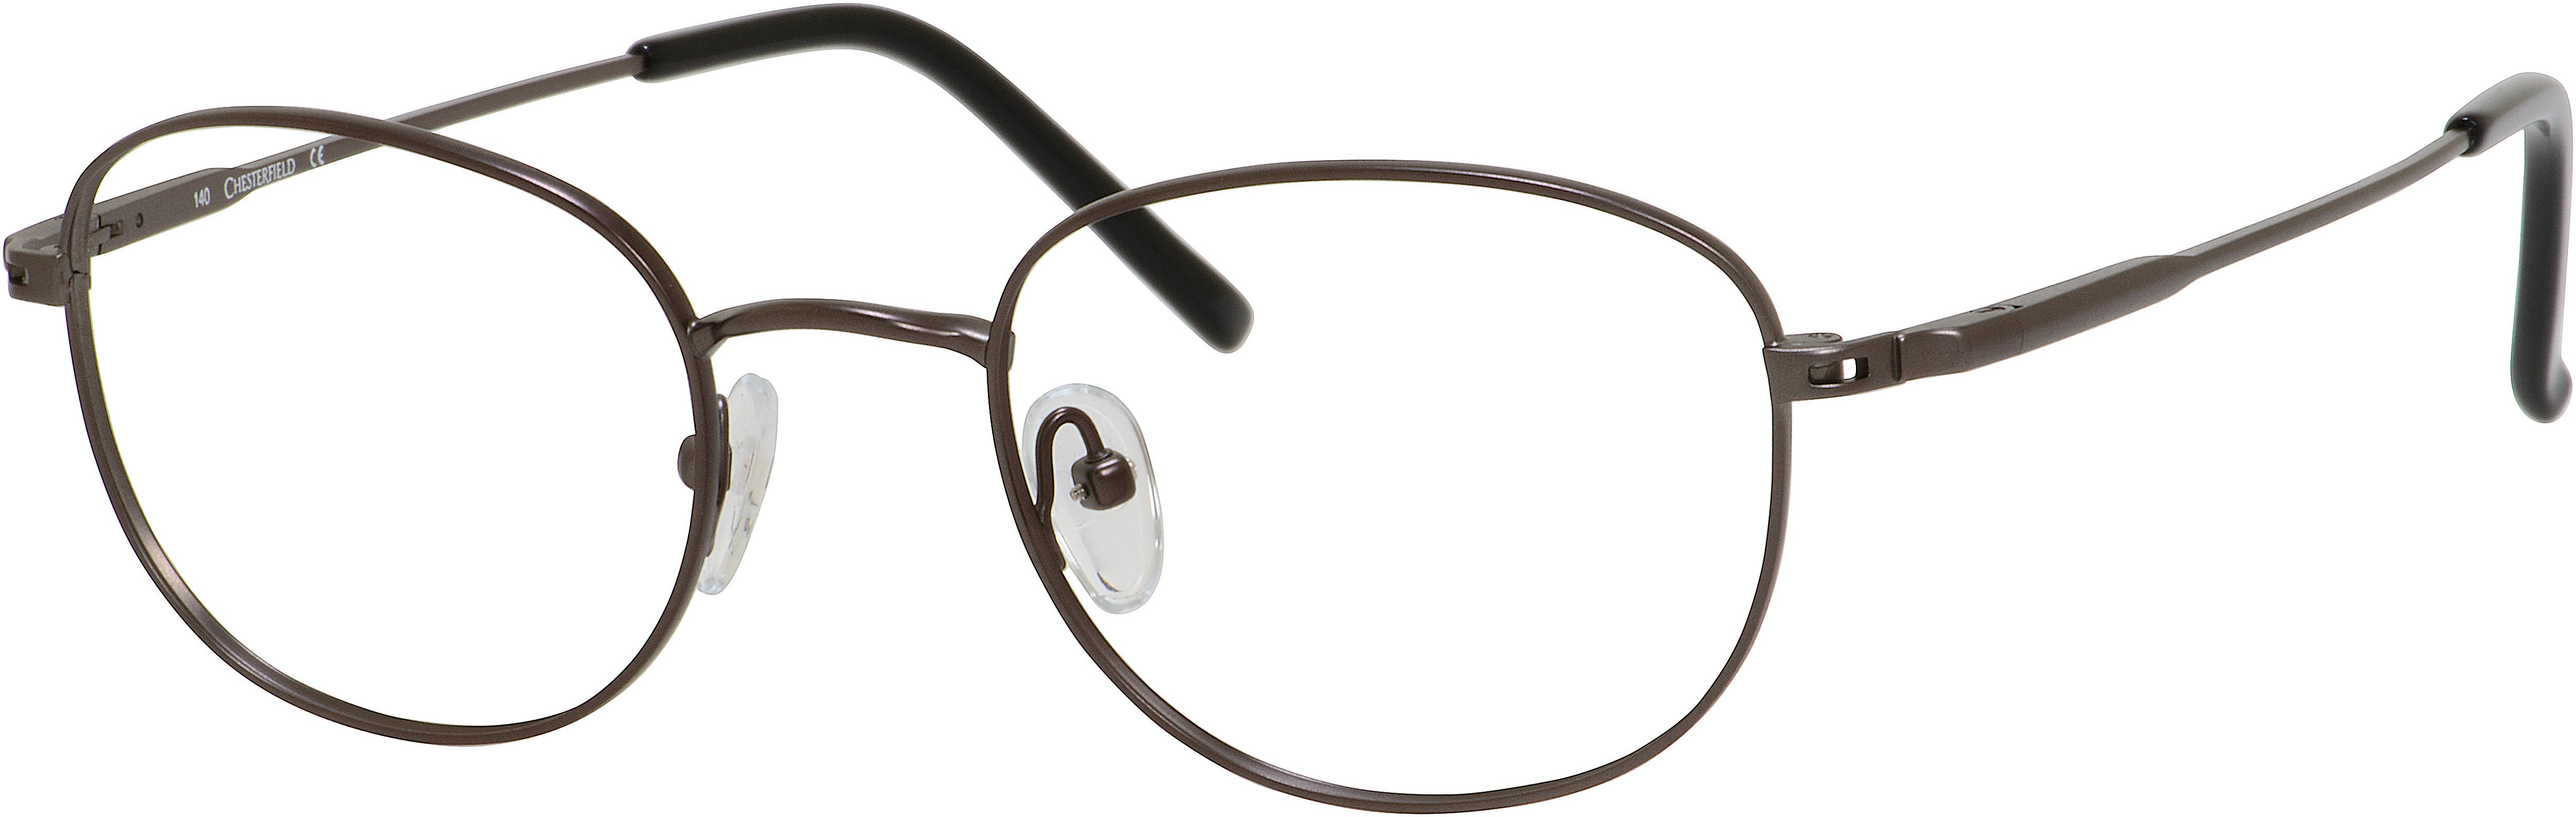  Chesterfield 864/T Round Eyeglasses 01P4-01P4  Ruthenium (00 Demo Lens)